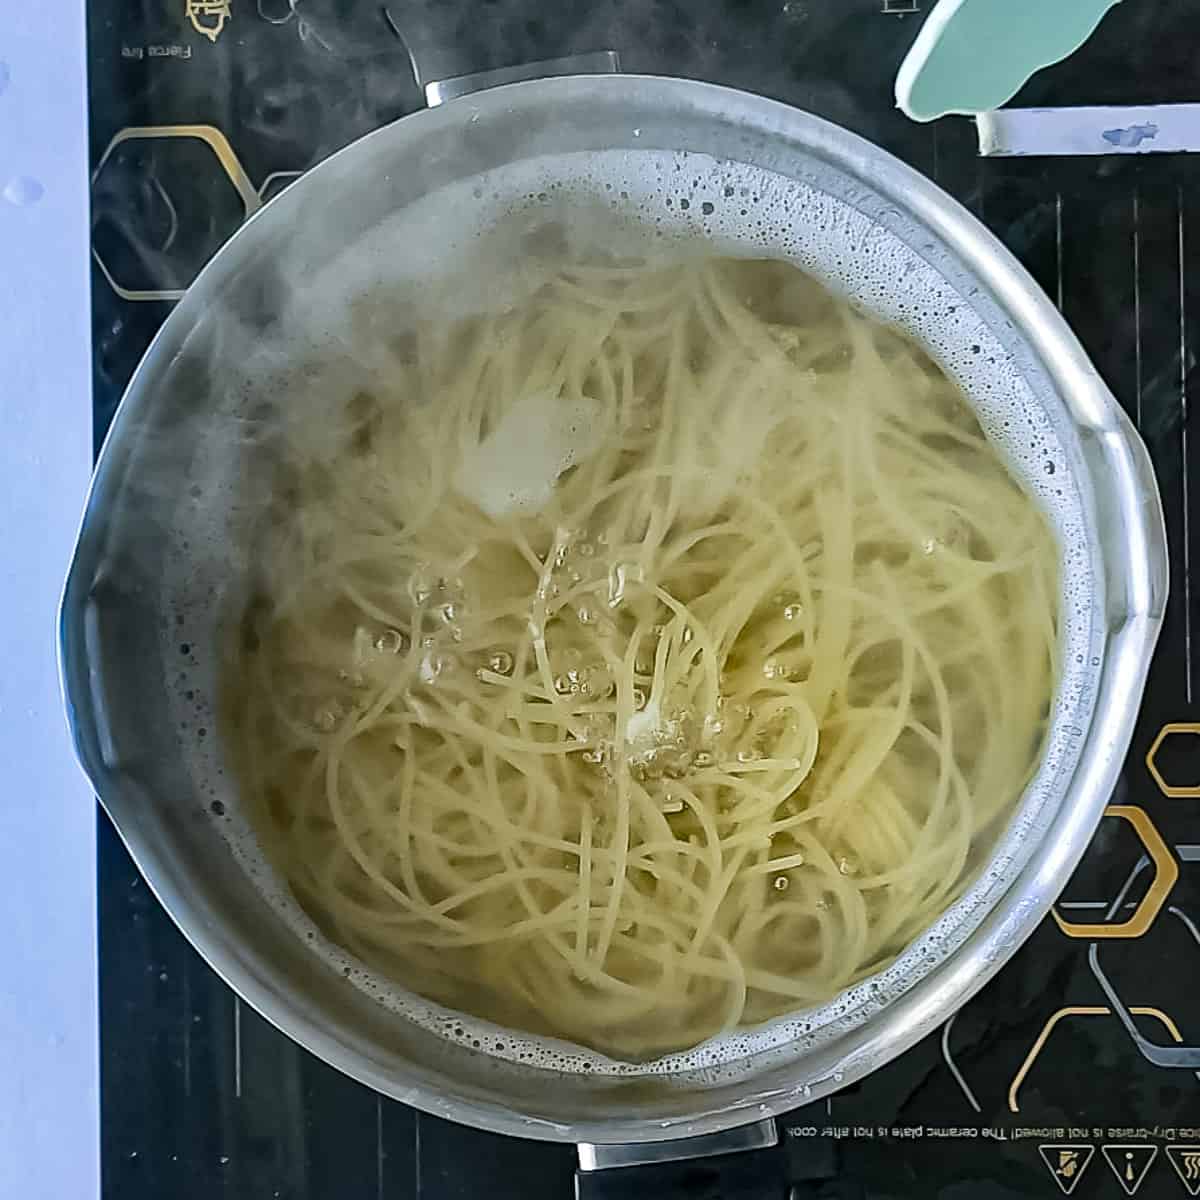 Spaghetti boiling in a pot.